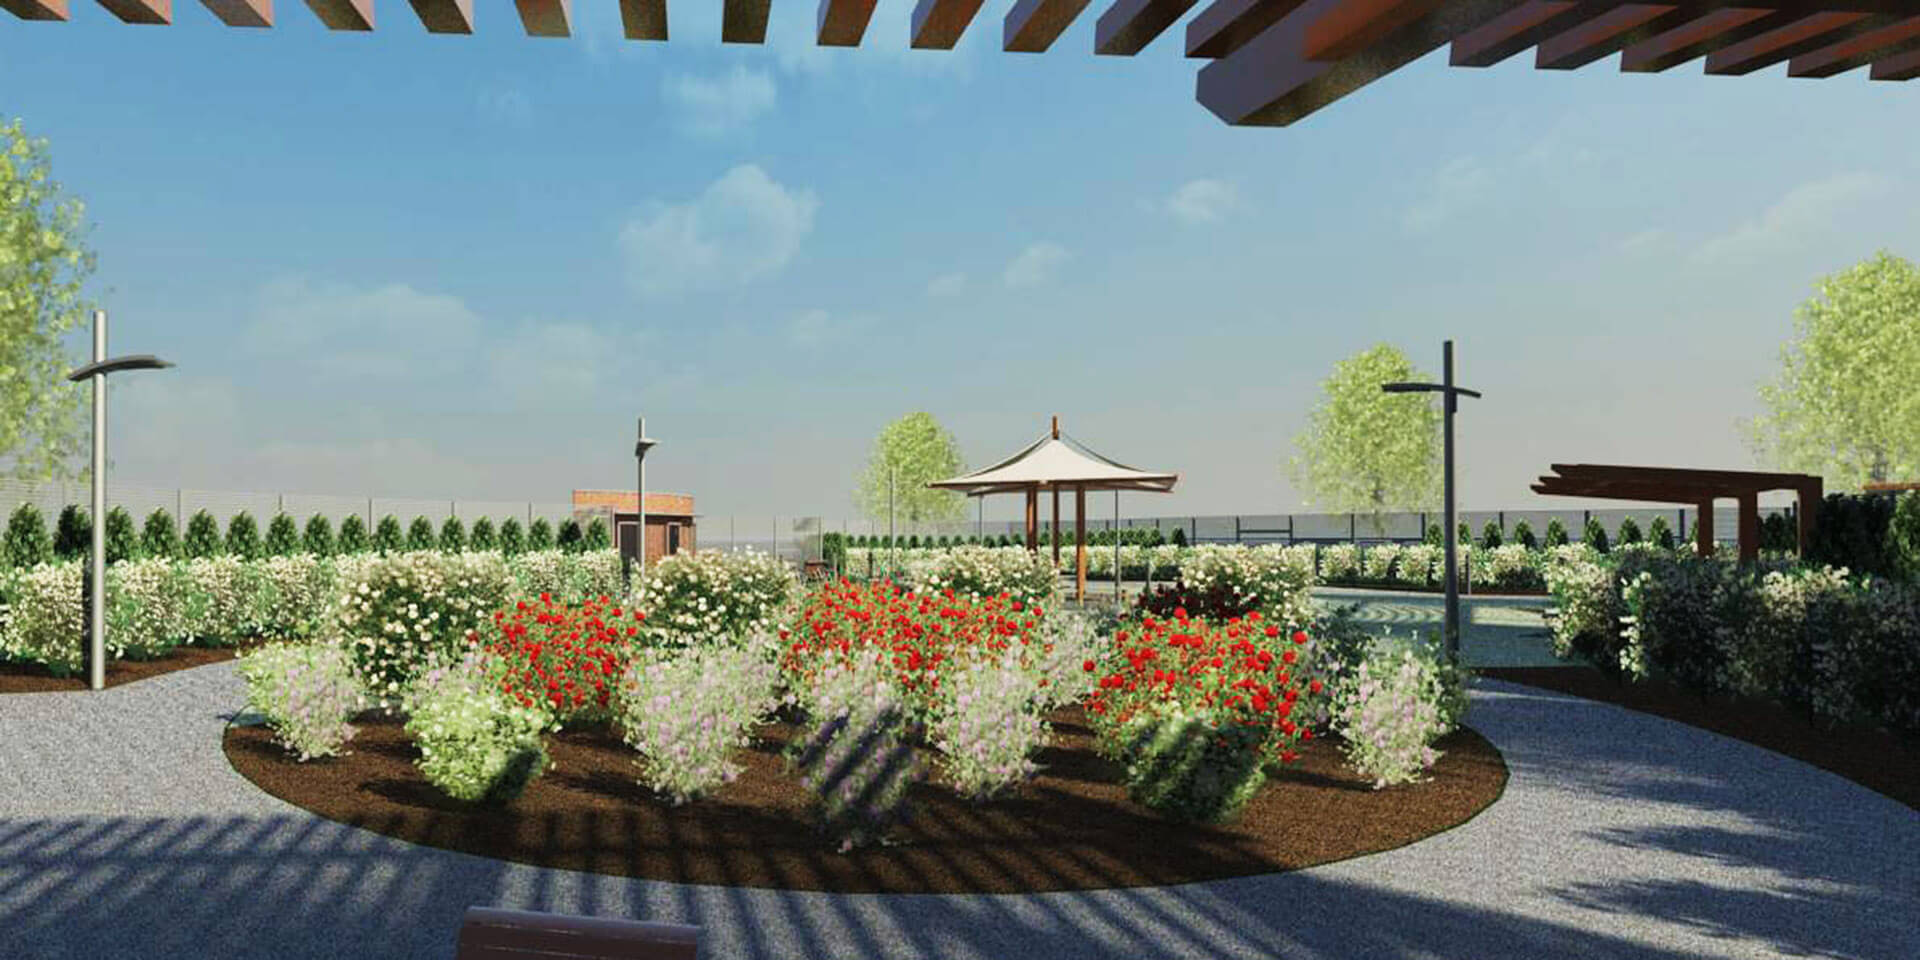 Digital rendering of an outdoor garden and courtyard